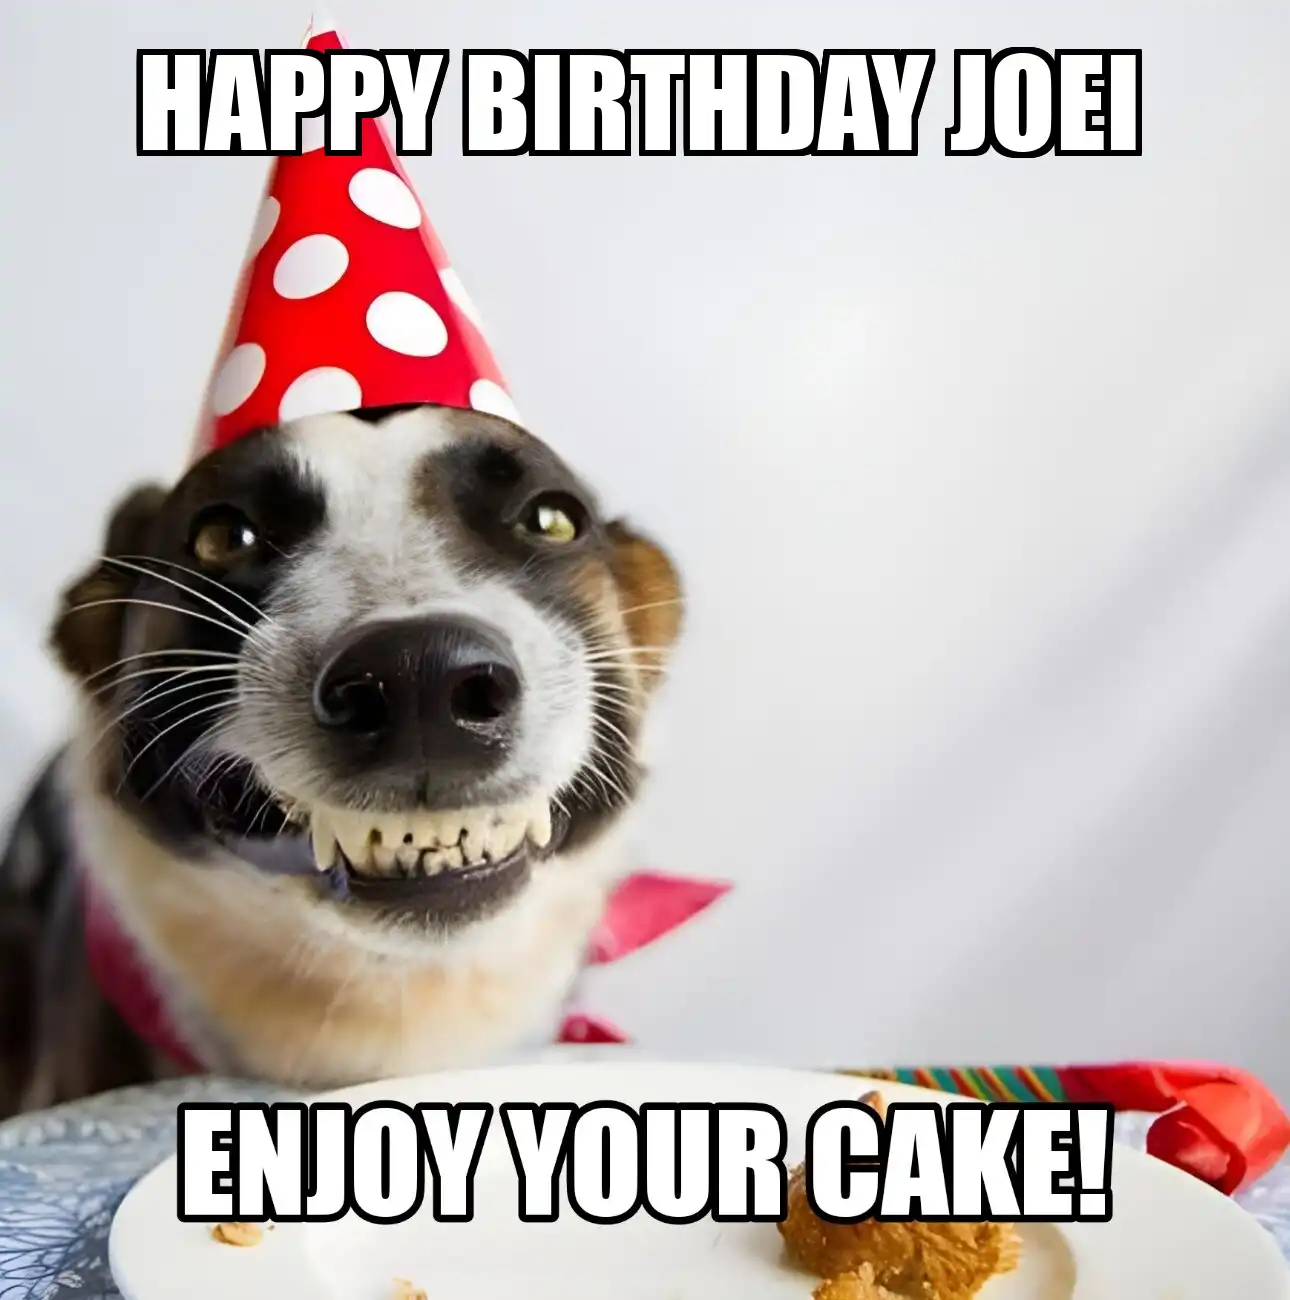 Happy Birthday Joei Enjoy Your Cake Dog Meme